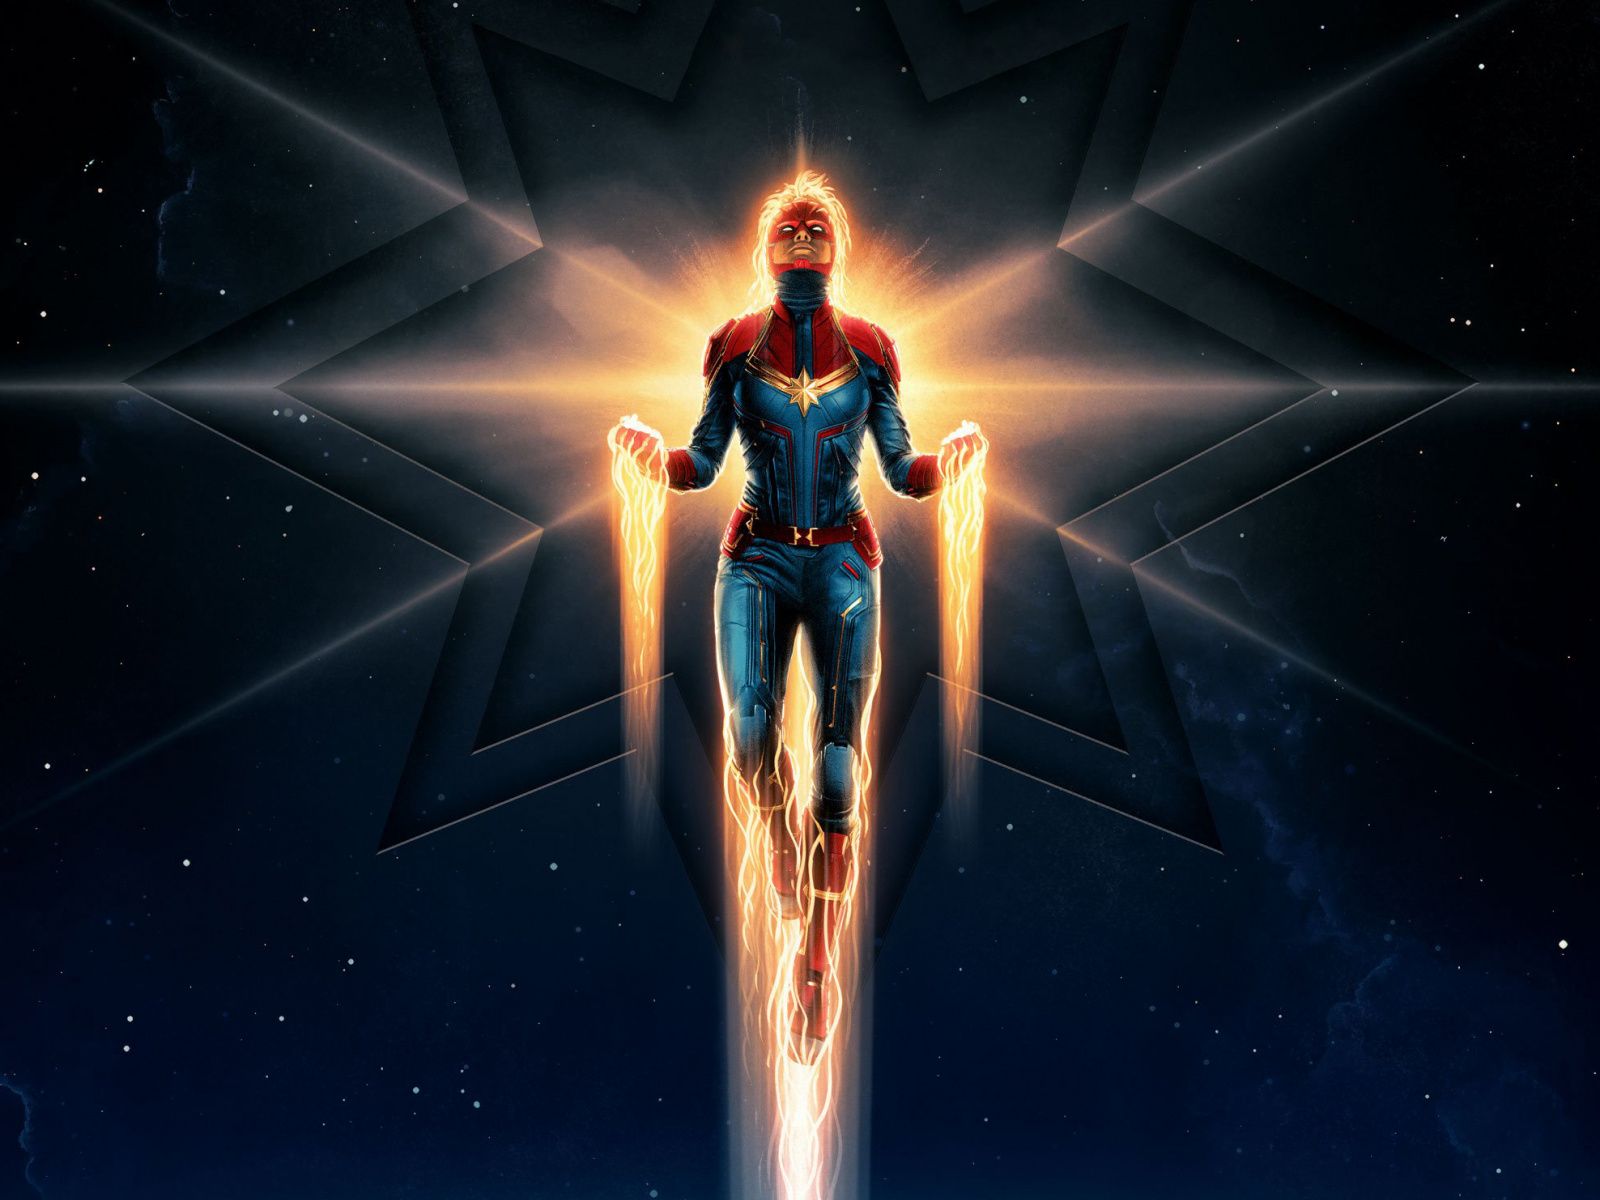 Download Poster, Captain Marvel, movie, fan art wallpaper, 1600x Standard 4: Fullscreen